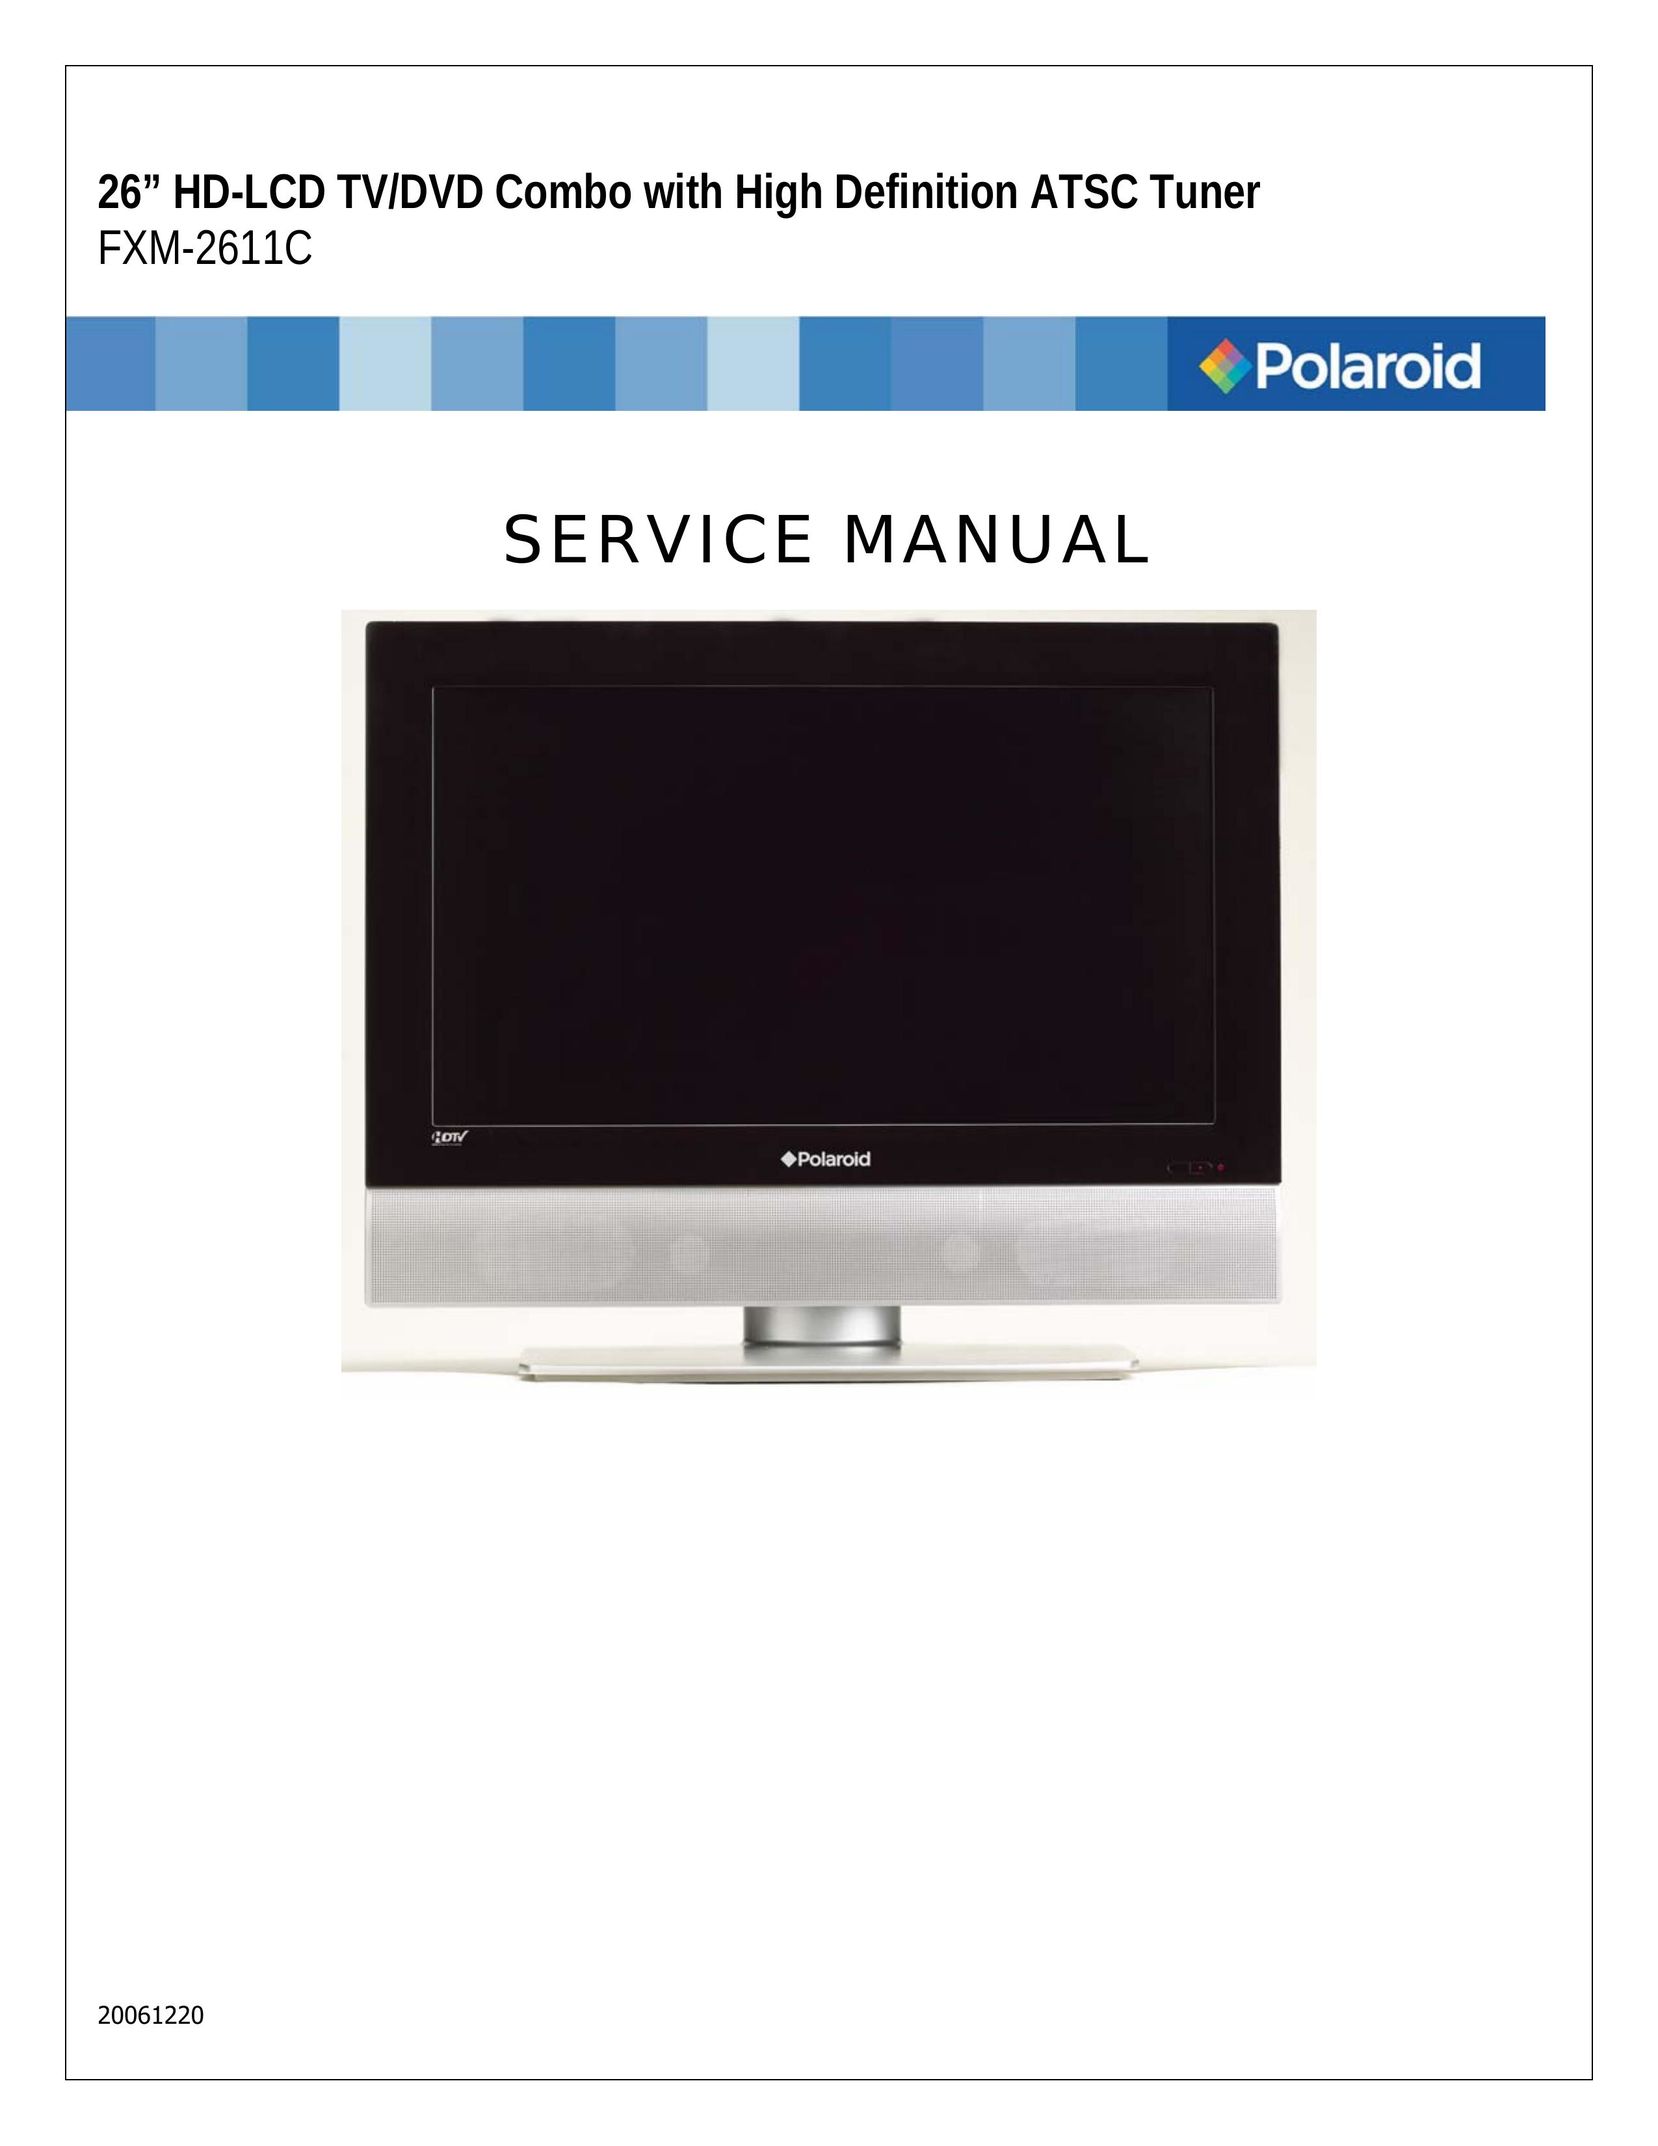 Polaroid FXM-2611C Flat Panel Television User Manual